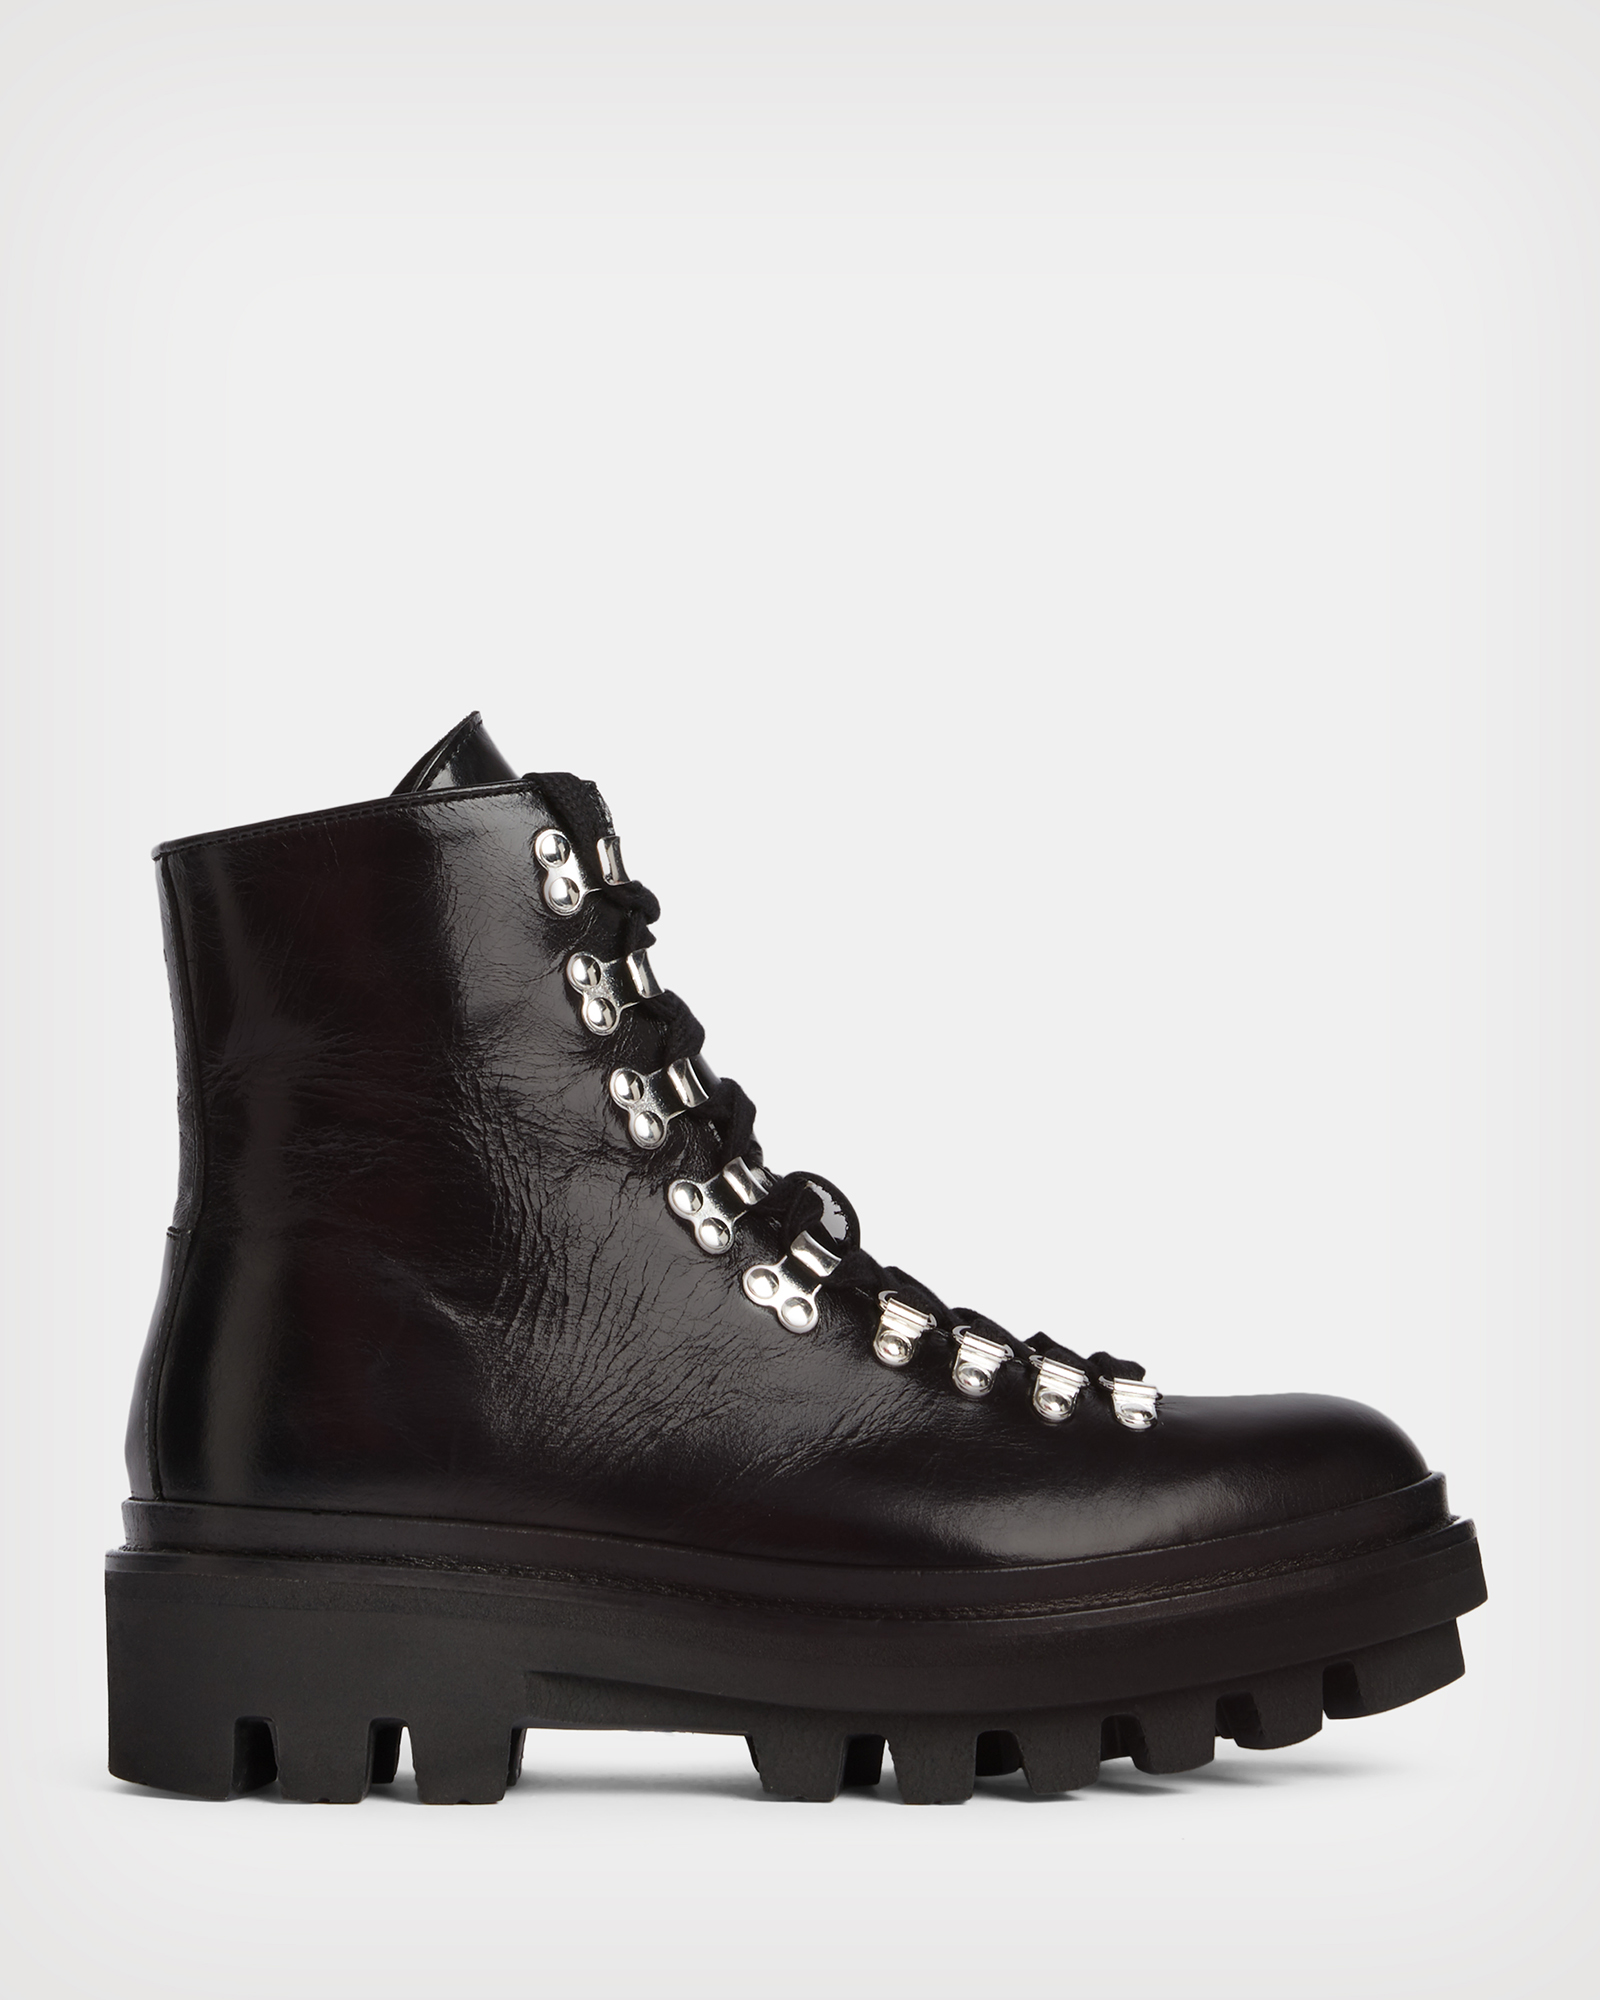 AllSaints Women's Leather Wanda Boots, Black, Size: UK 3/US 5/EU 36